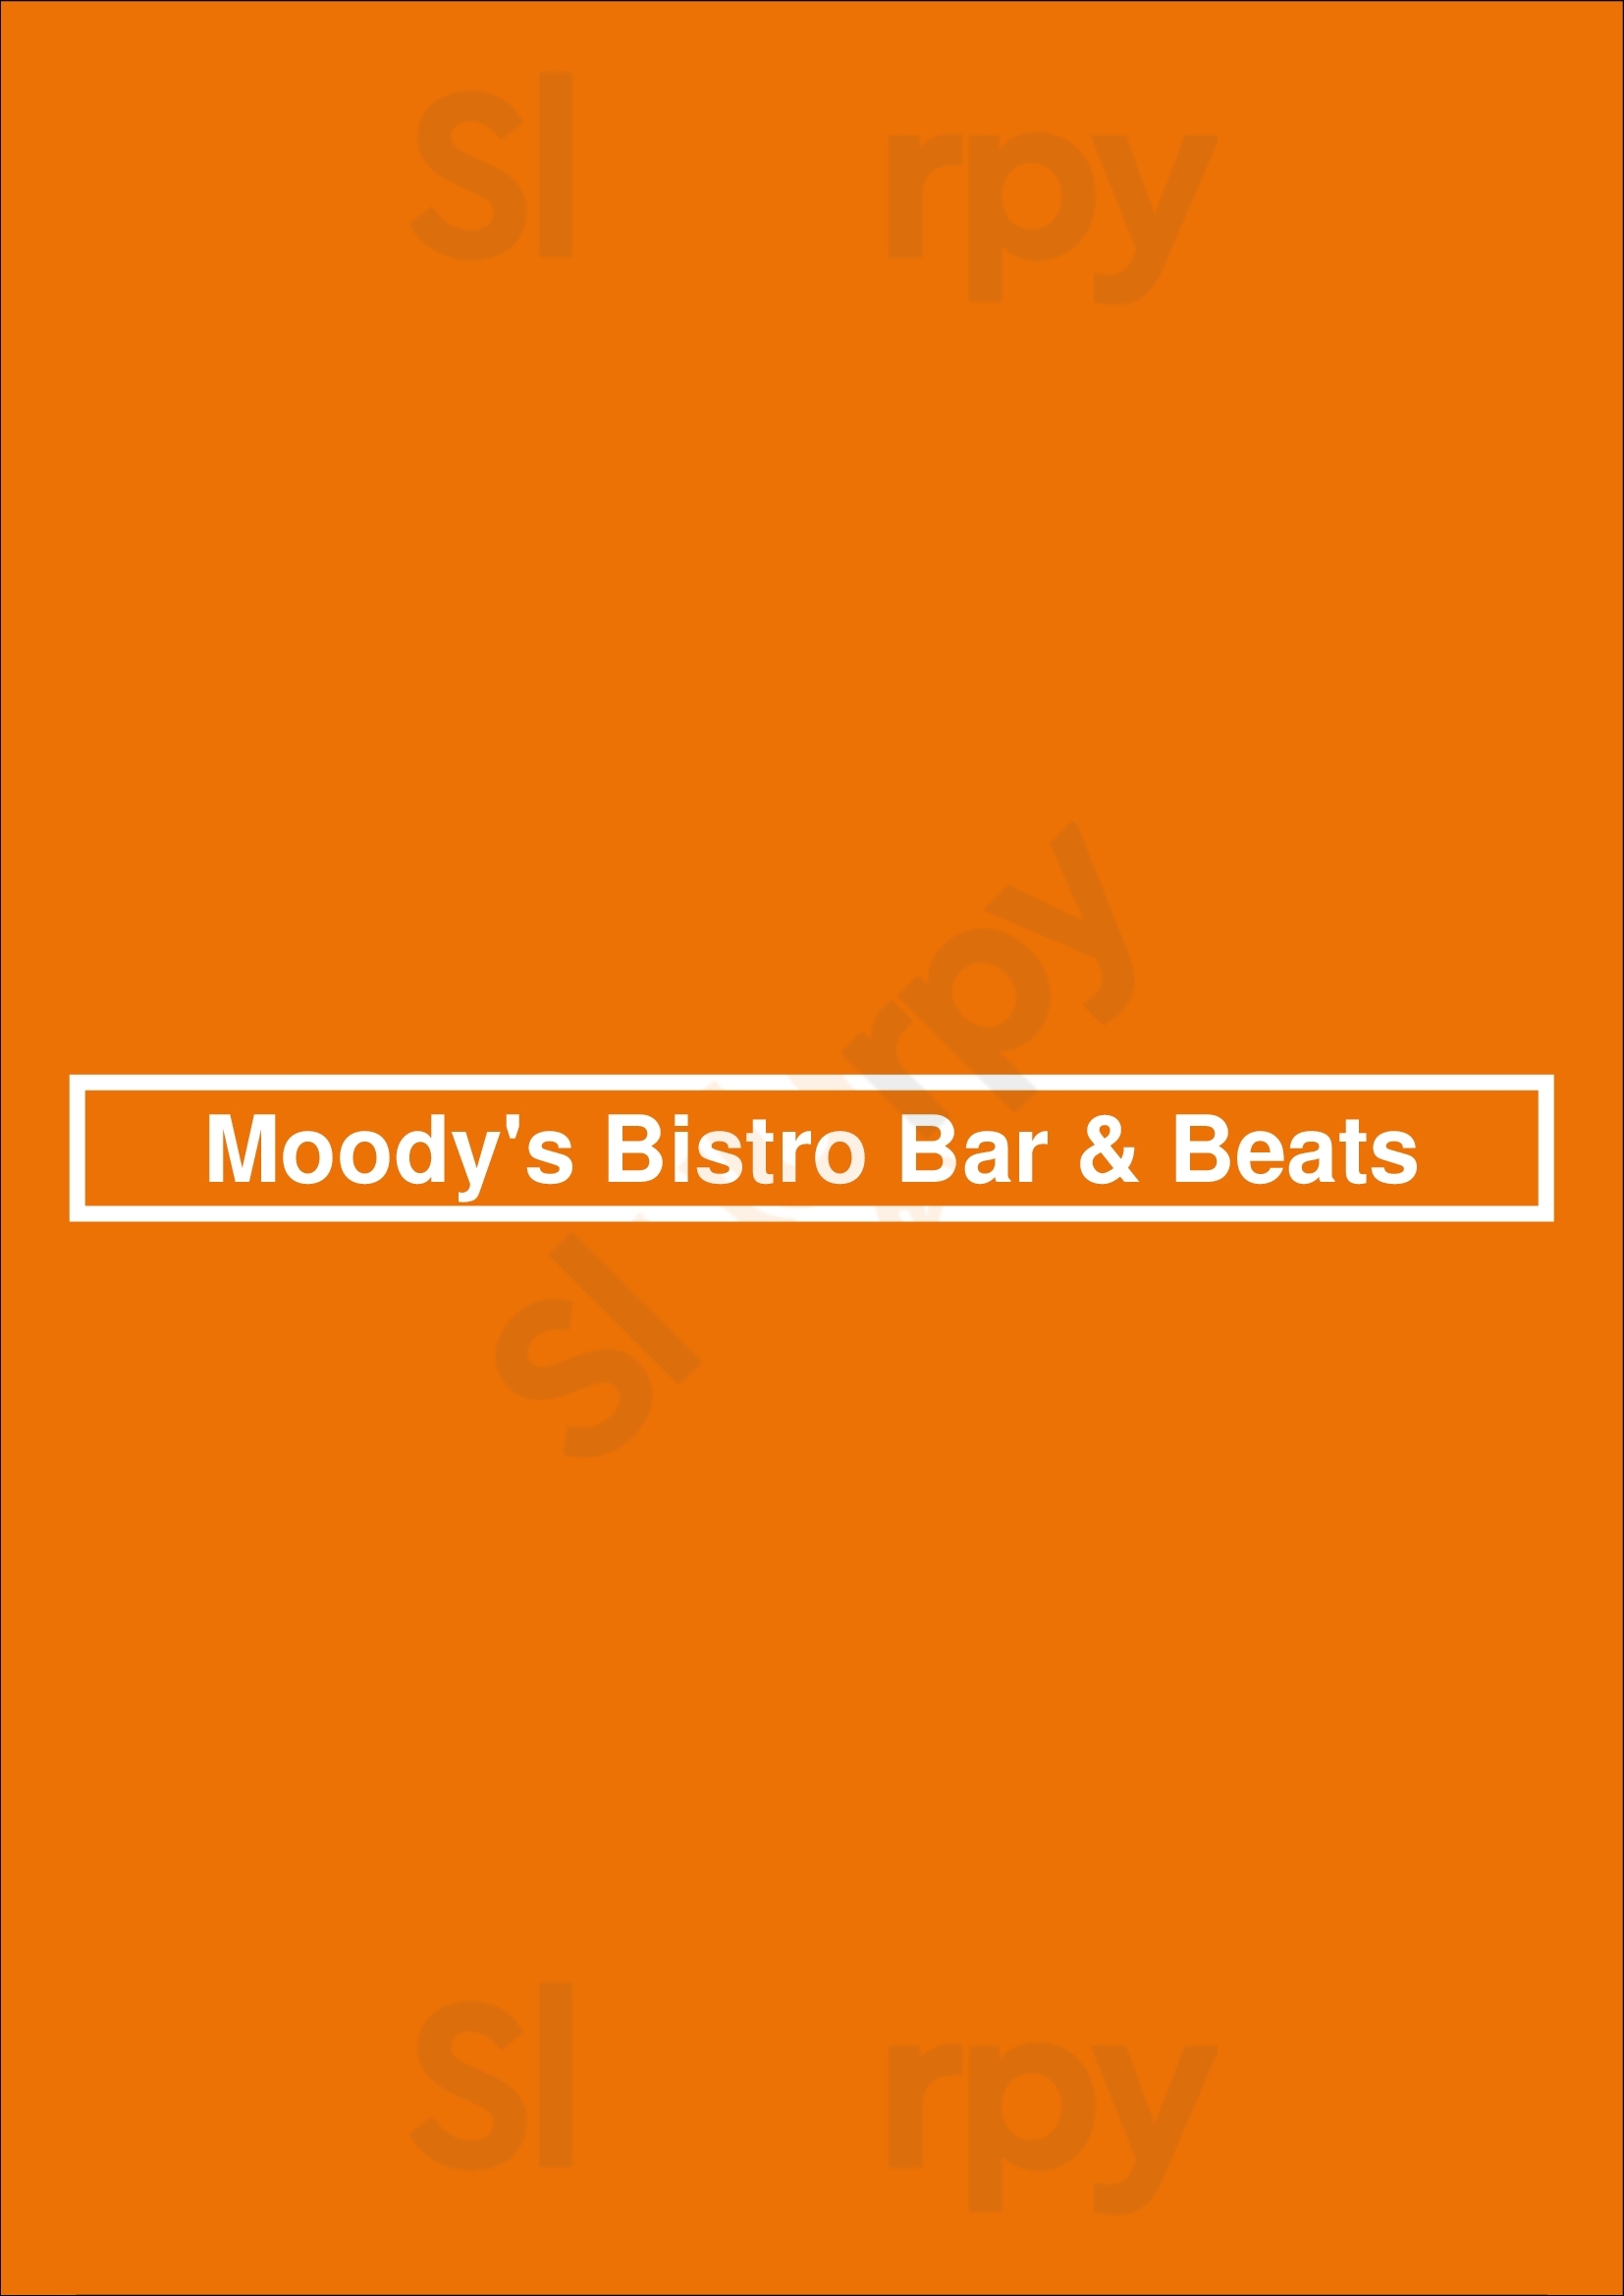 Moody's Bistro Bar & Beats Truckee Menu - 1